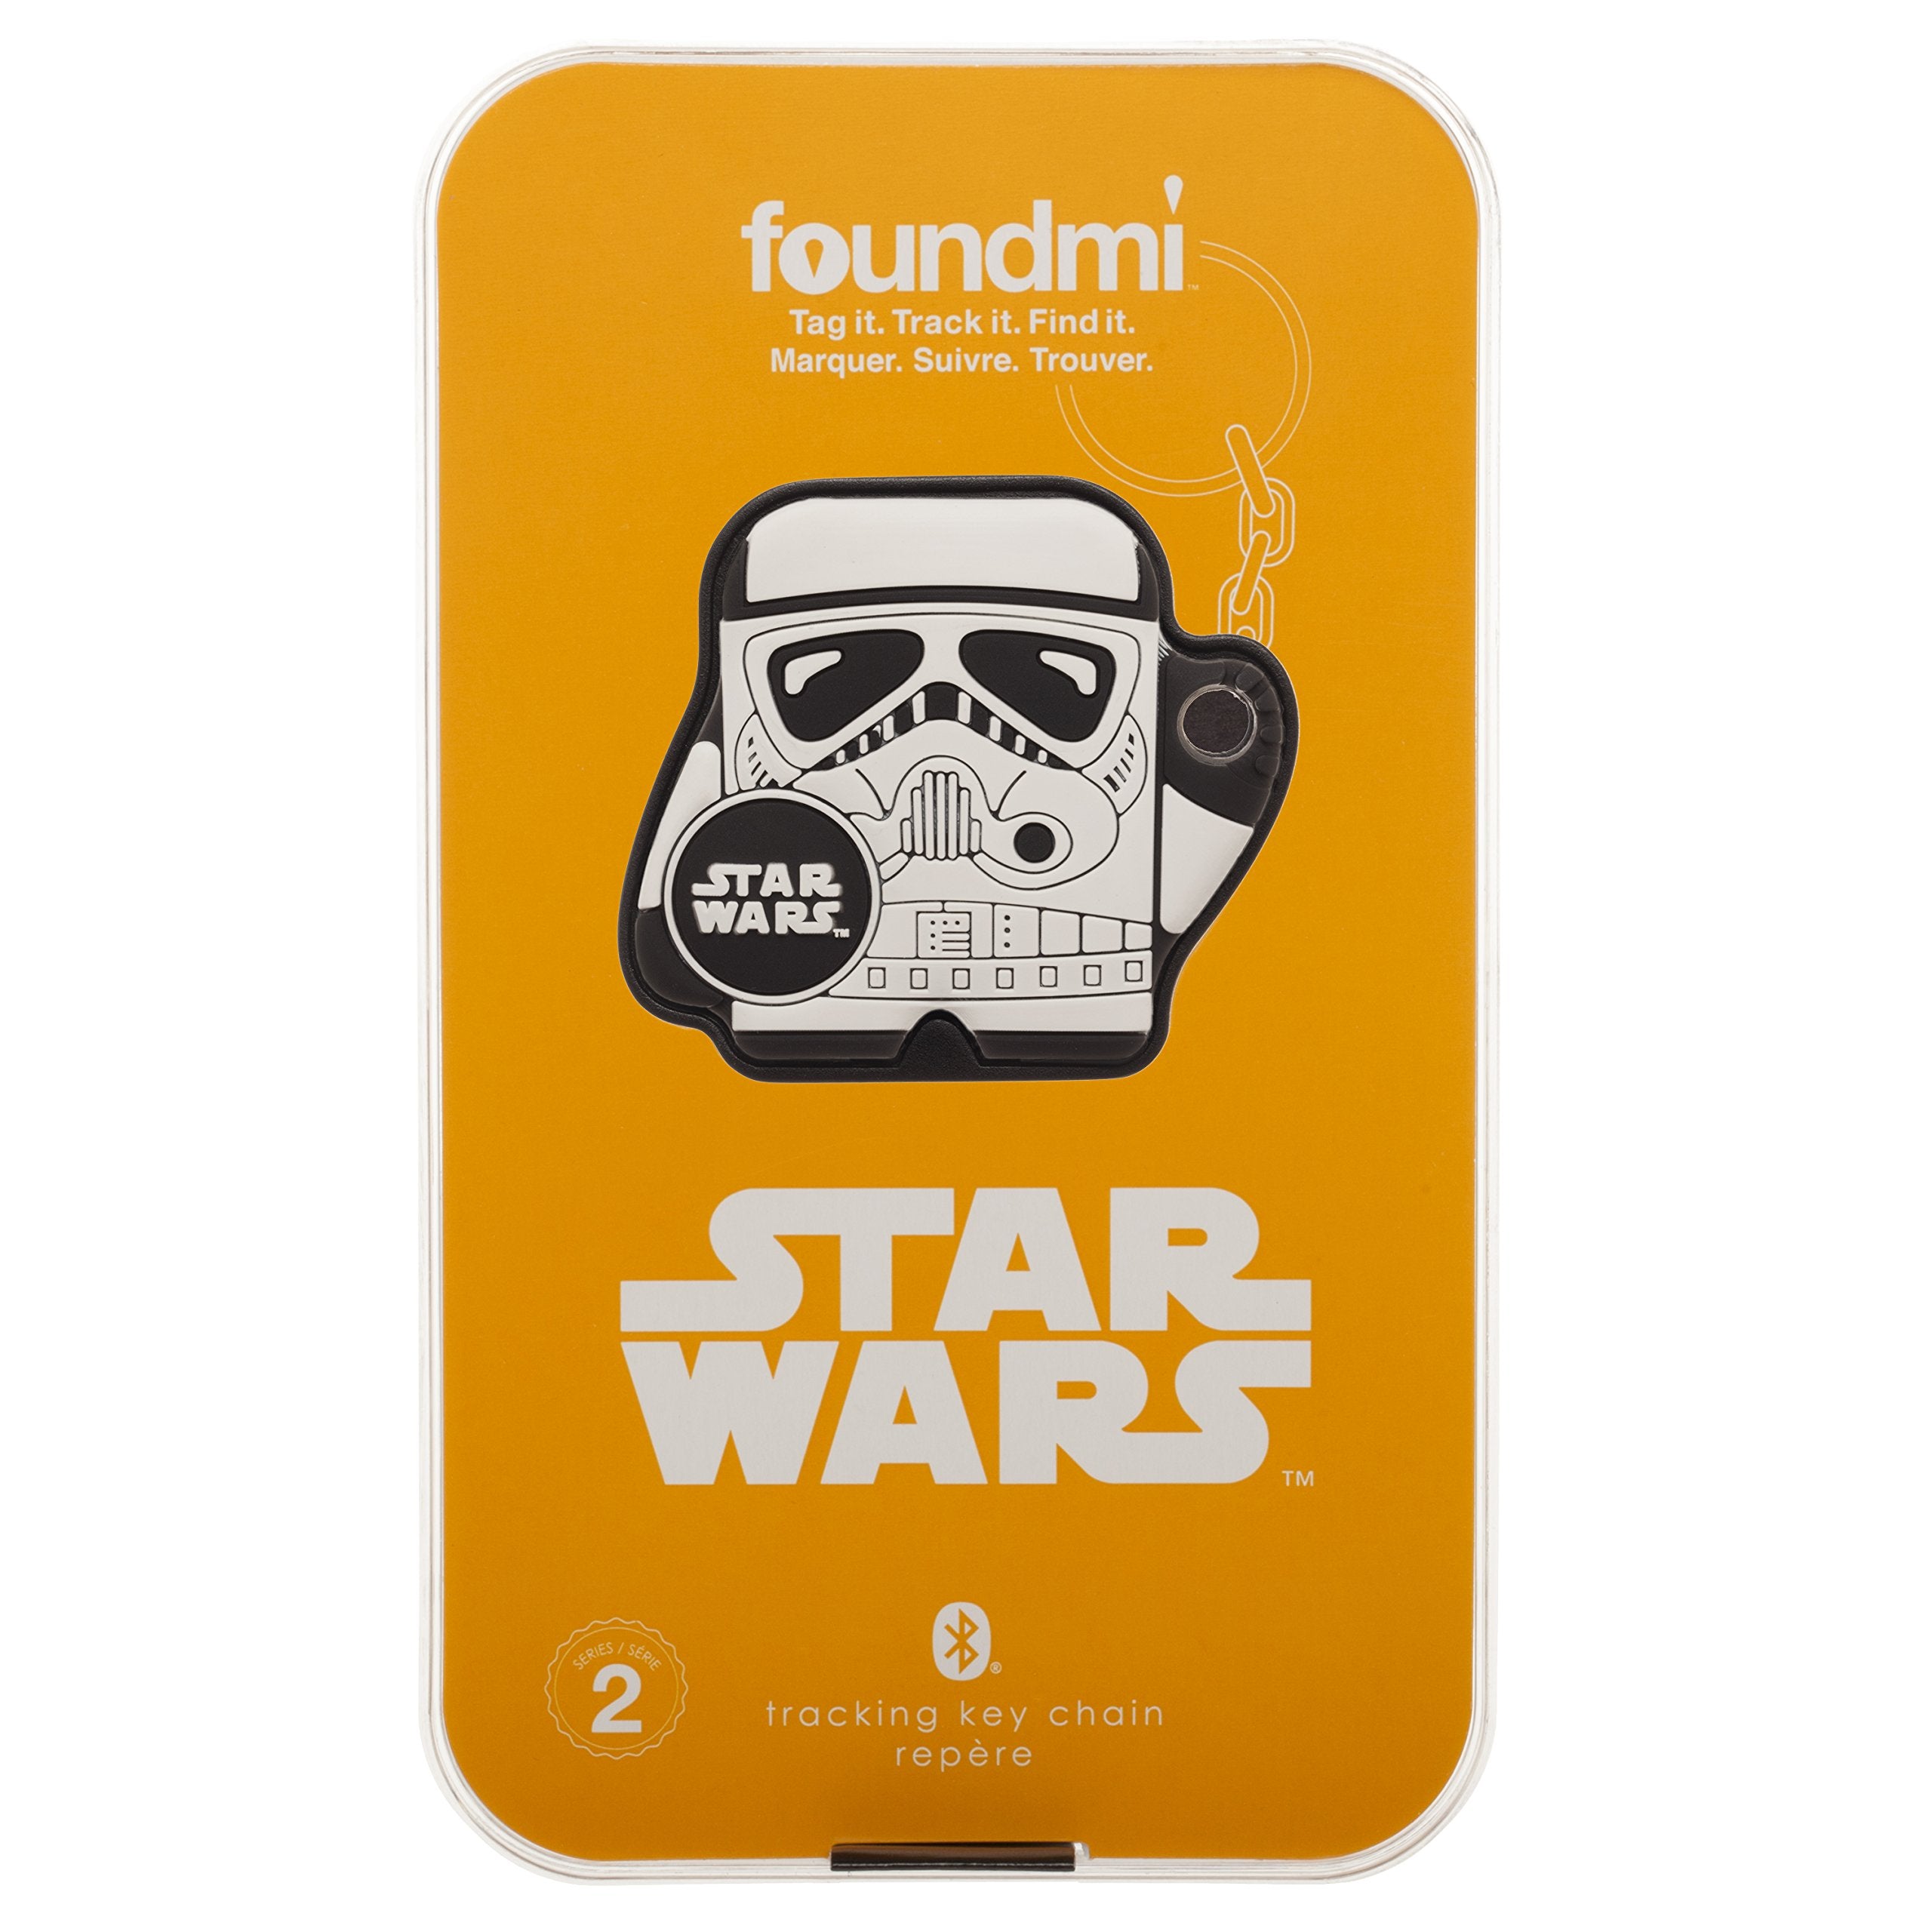 Star Wars foundmi 2.0 Personal Bluetooth Tracker, Storm Trooper